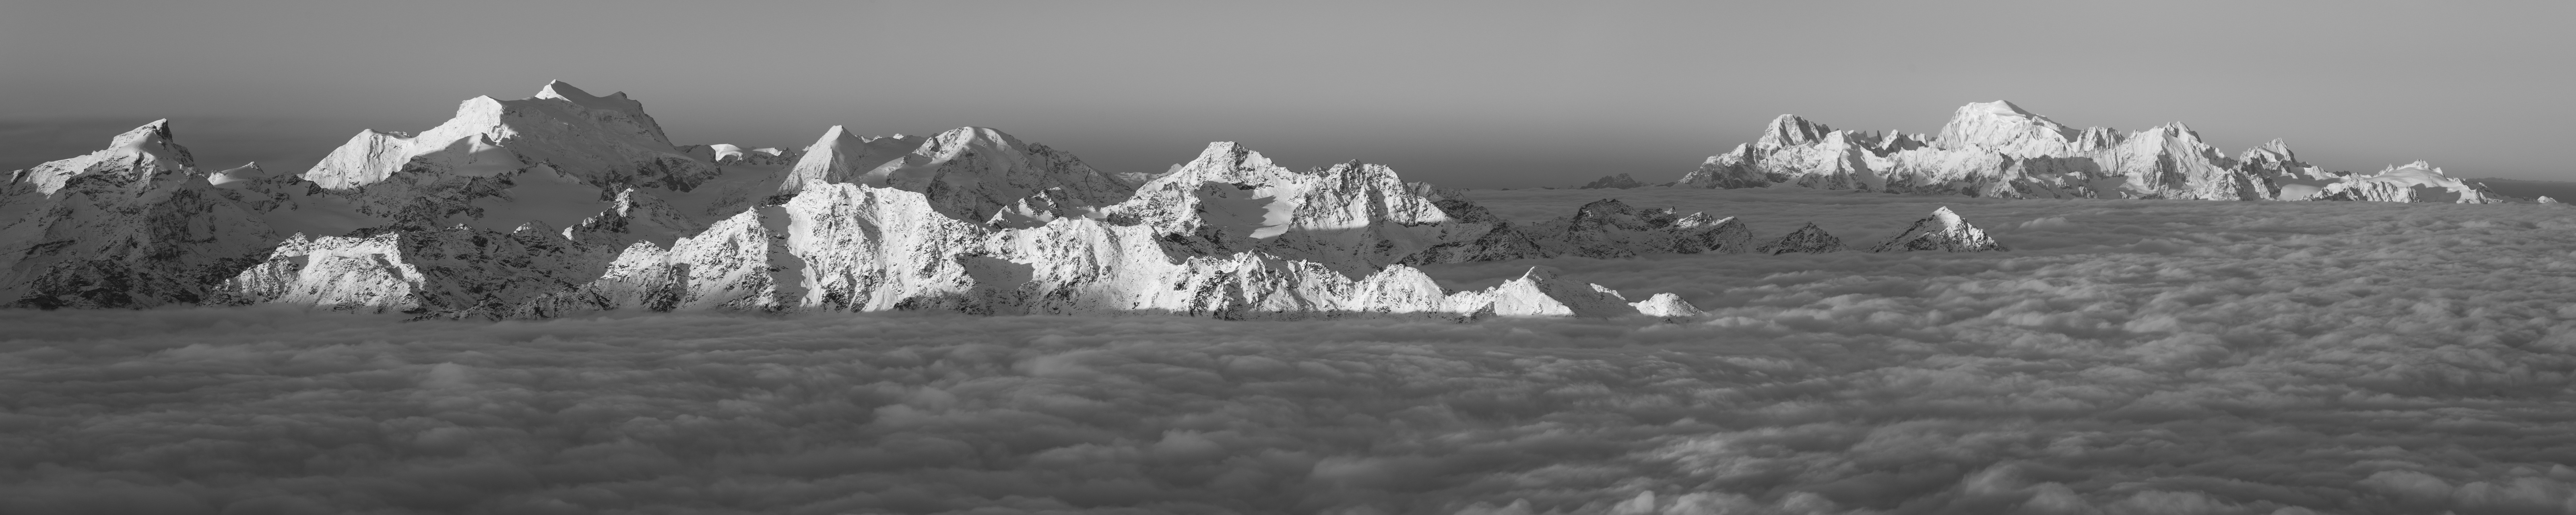 Verbier Switzerland - Grand combin - black and white Panoramic mountain poster 